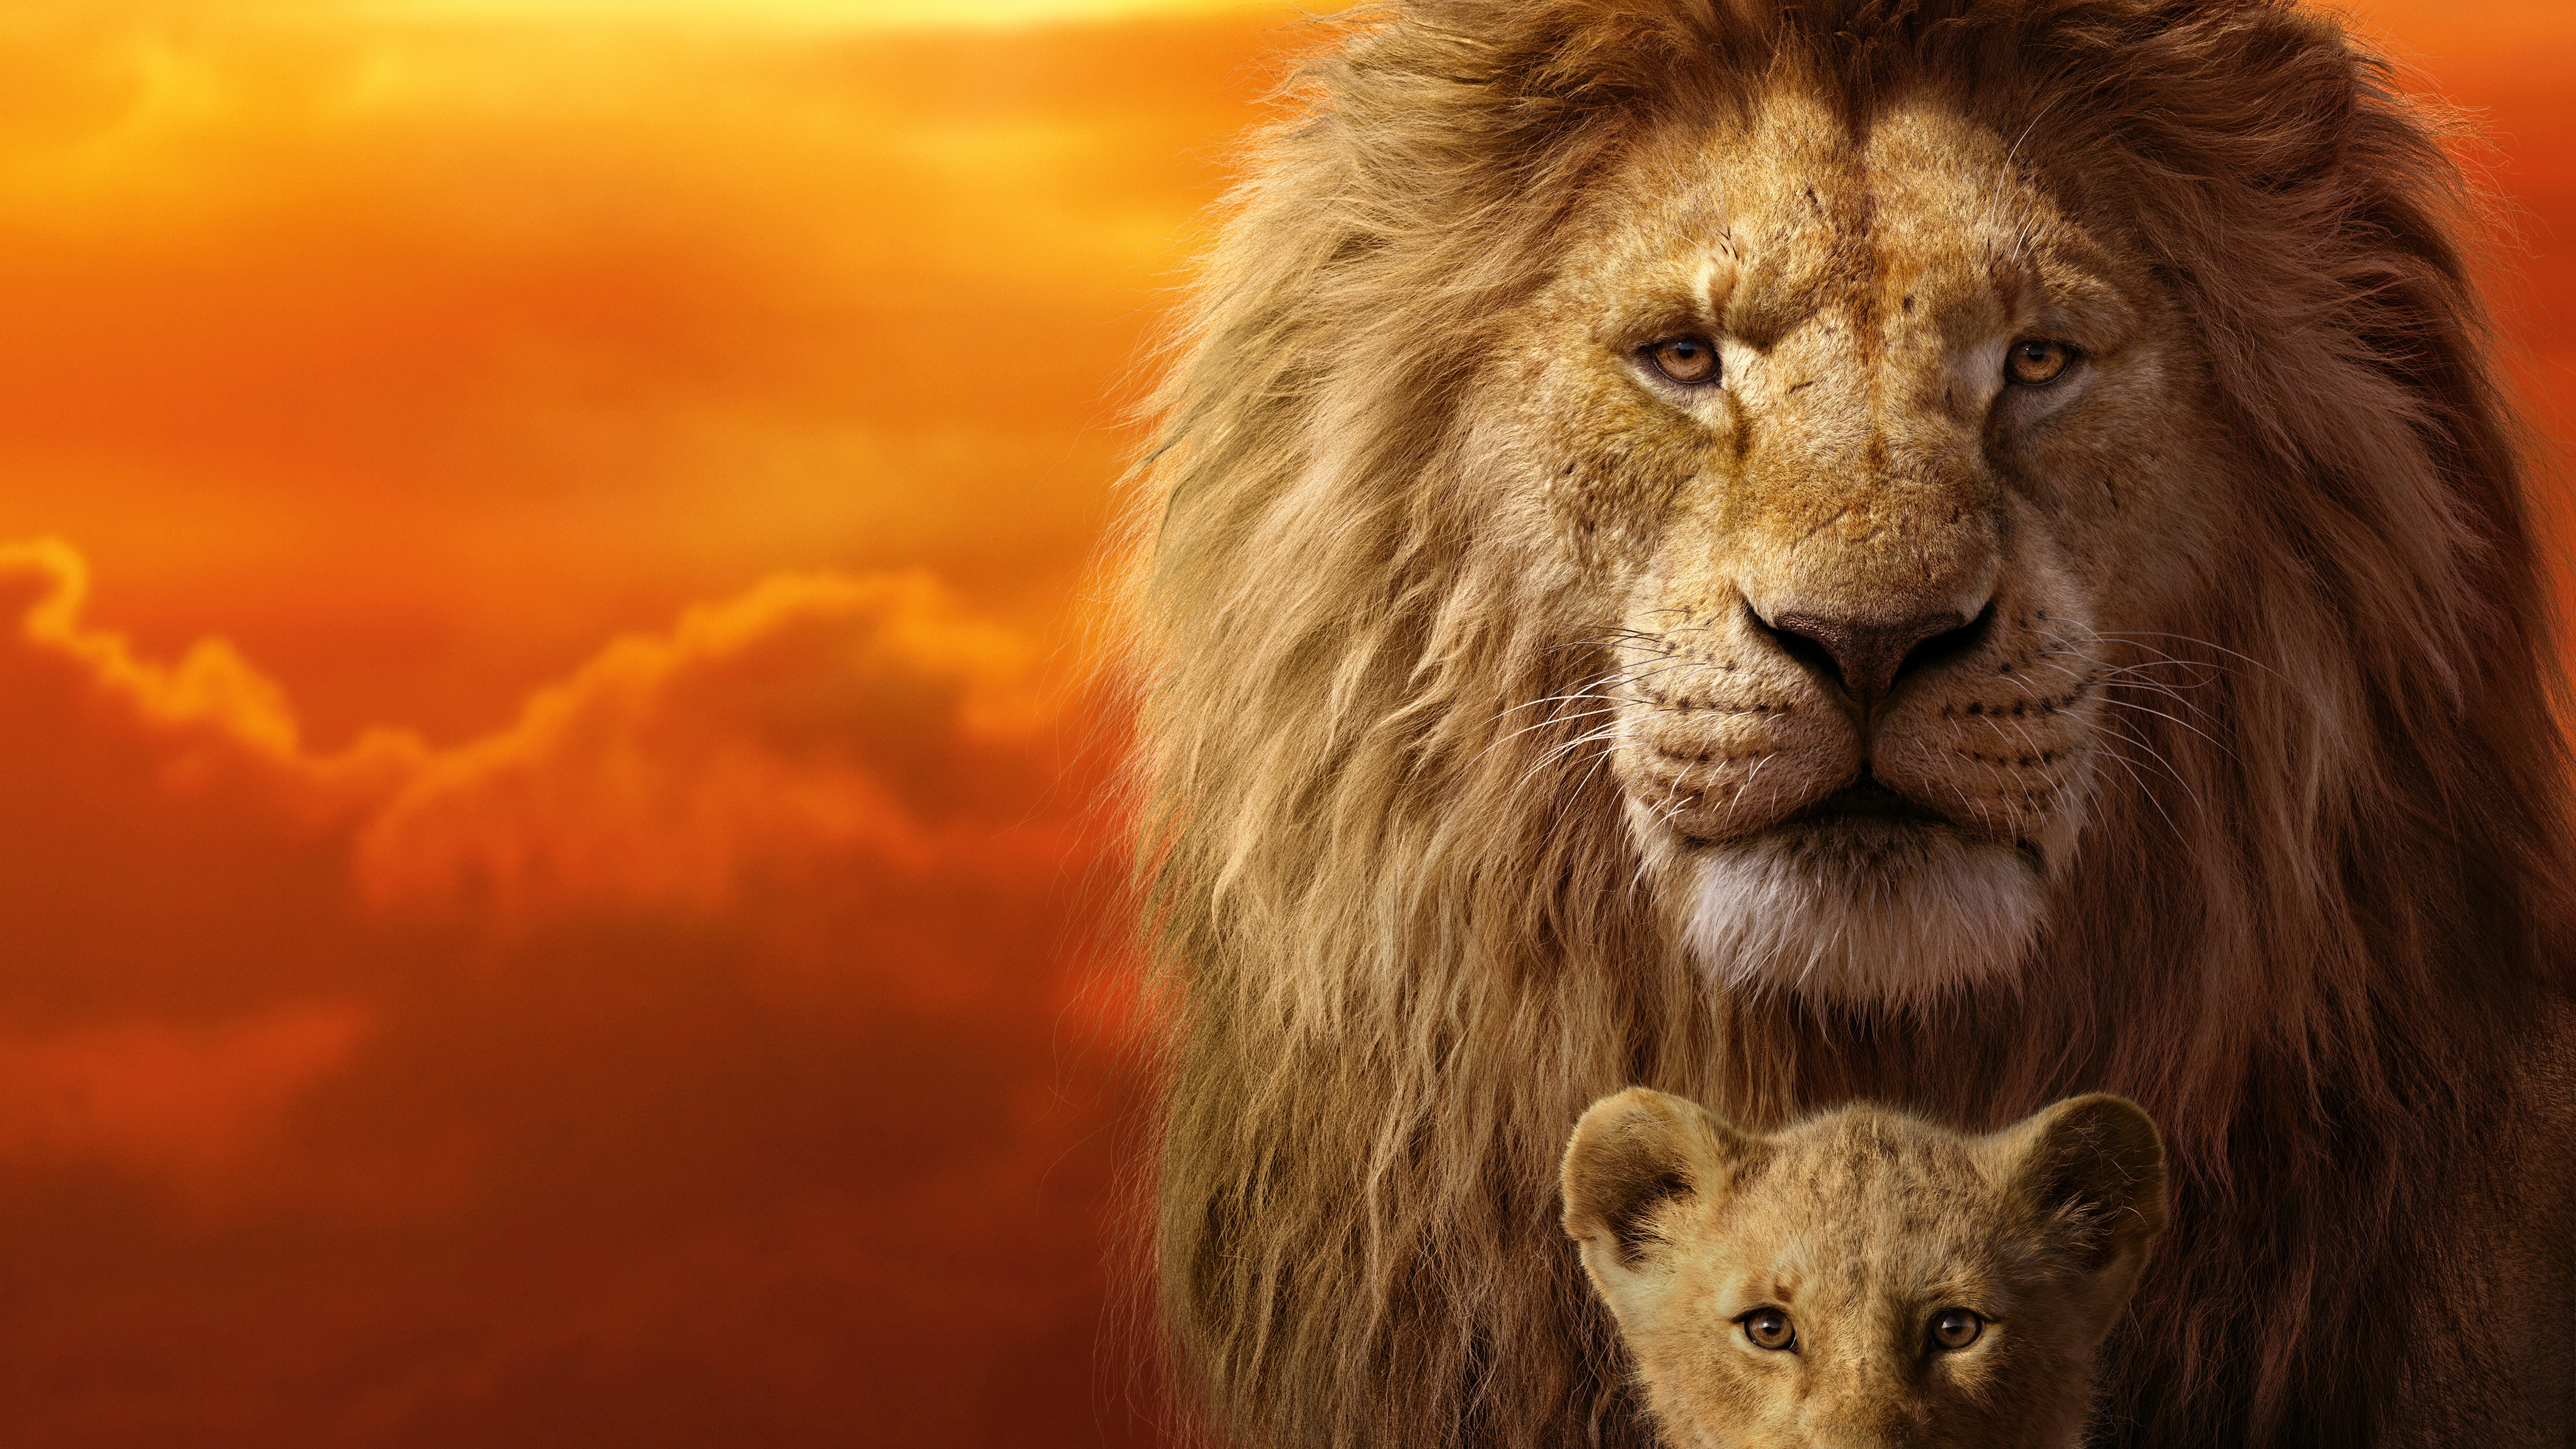 Simba Mufasa The Lion King Lion 7680x4320